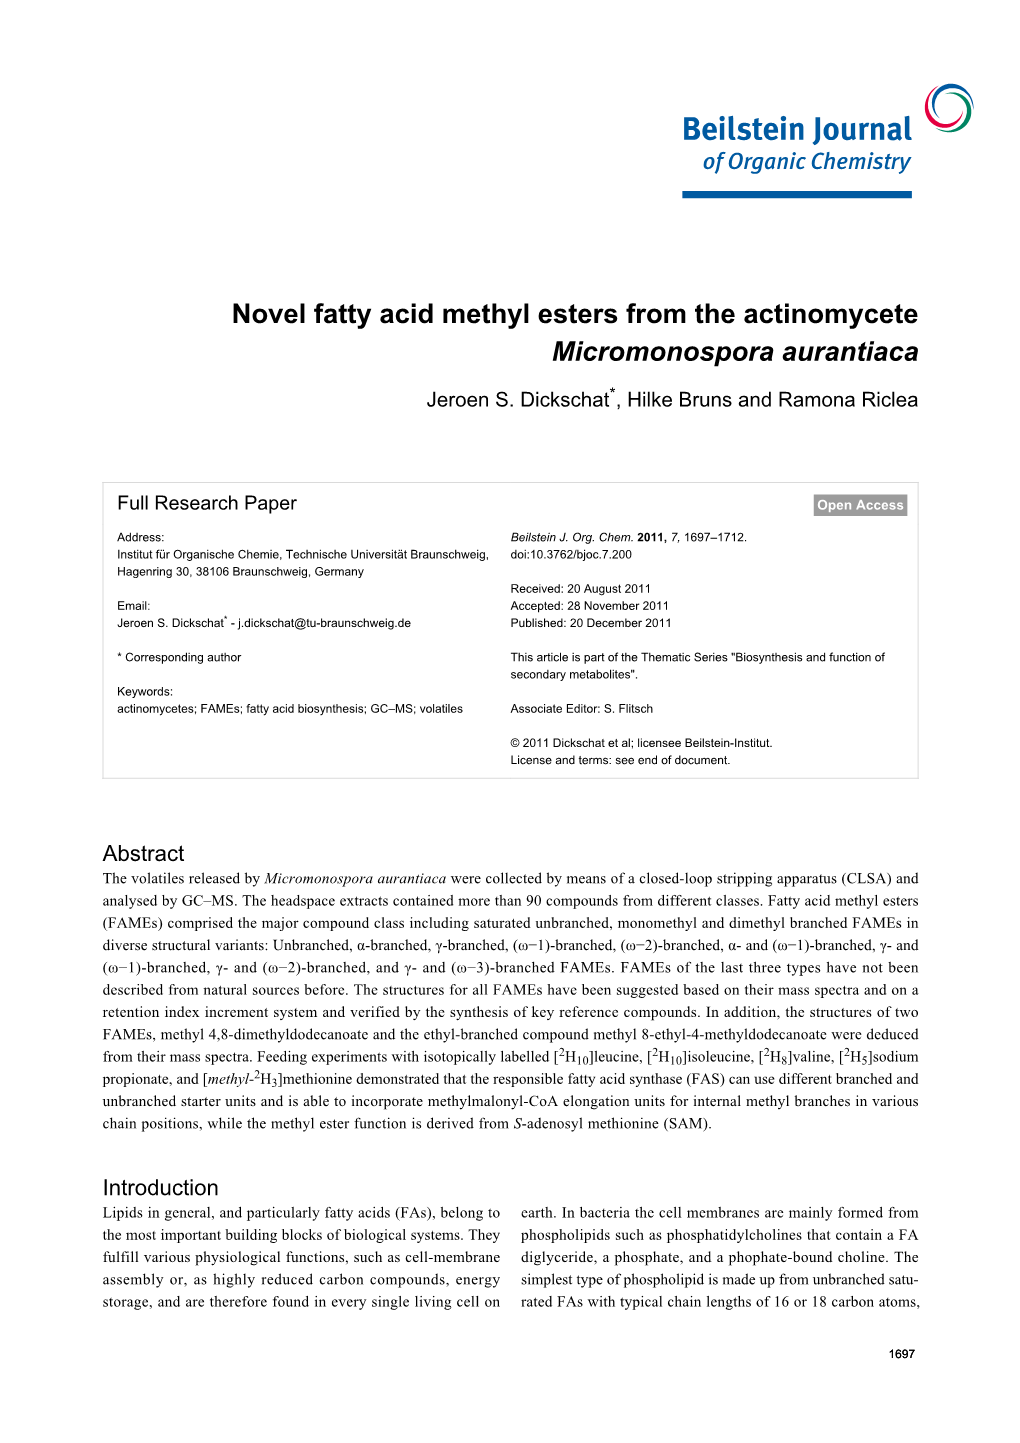 Novel Fatty Acid Methyl Esters from the Actinomycete Micromonospora Aurantiaca